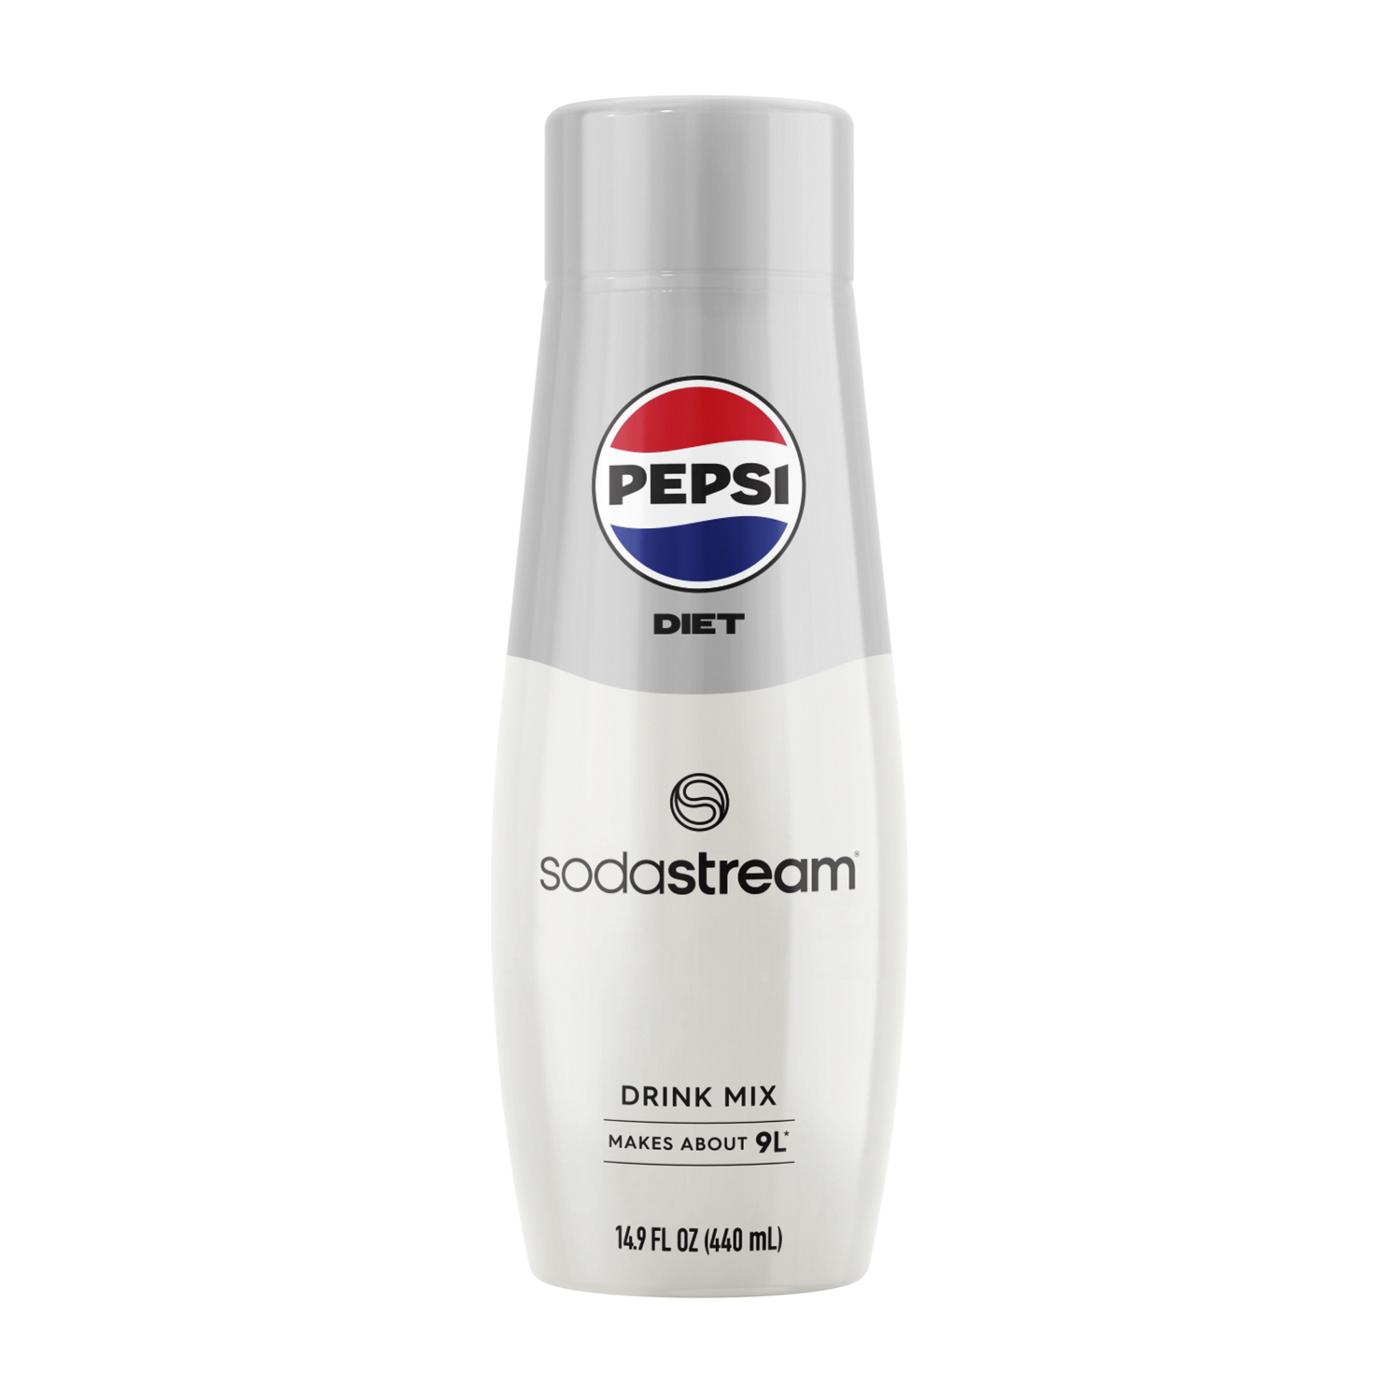 SodaStream Diet Pepsi Drink Mix; image 1 of 2